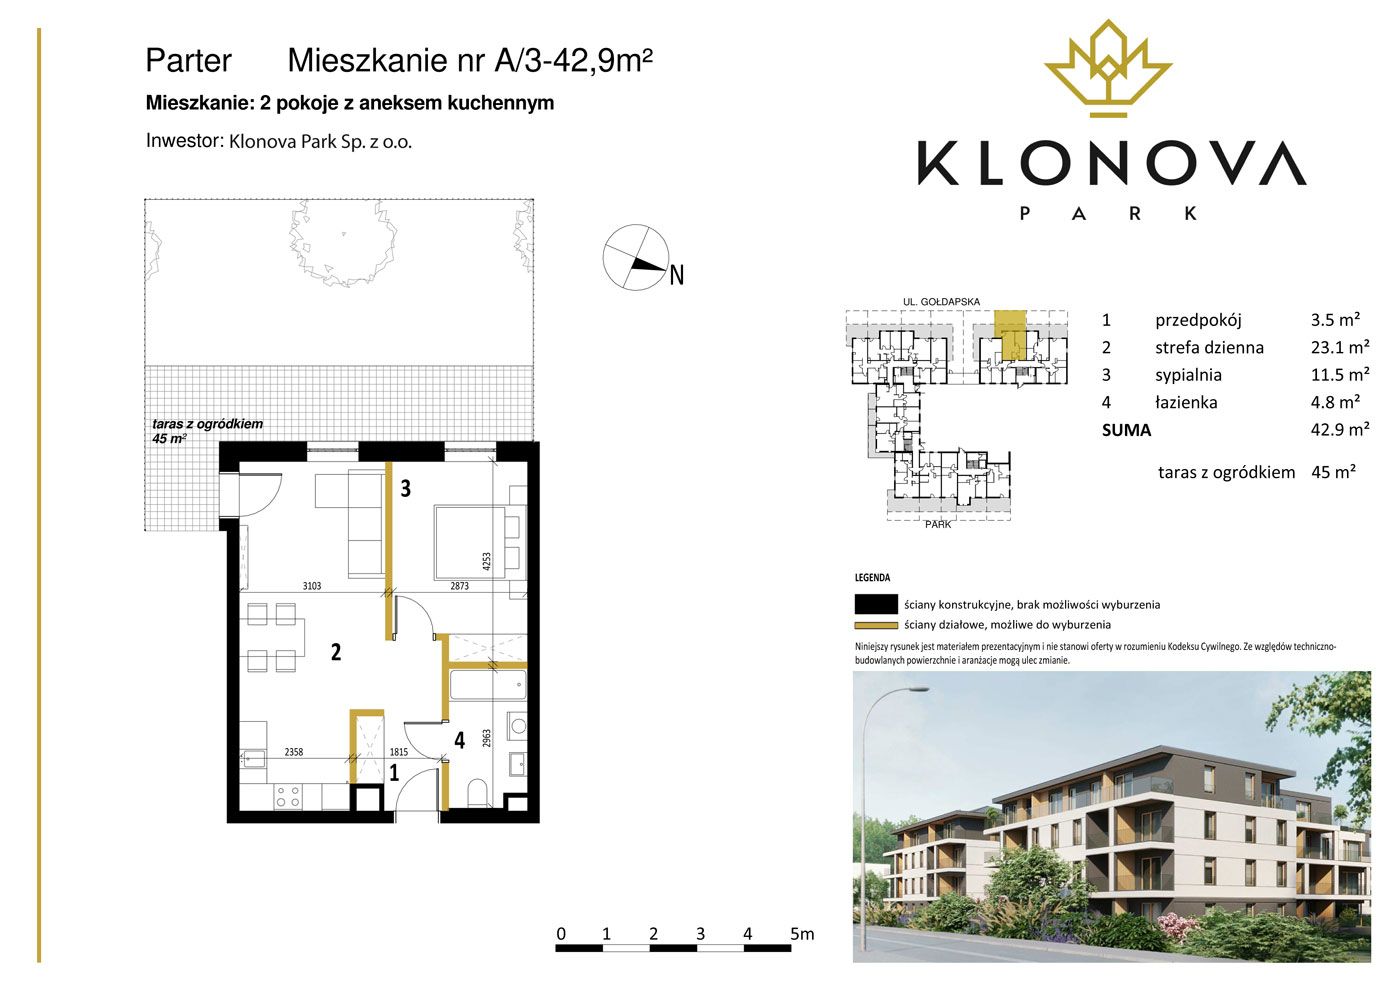 Apartamenty Klonova Park - Plan mieszkania A/3